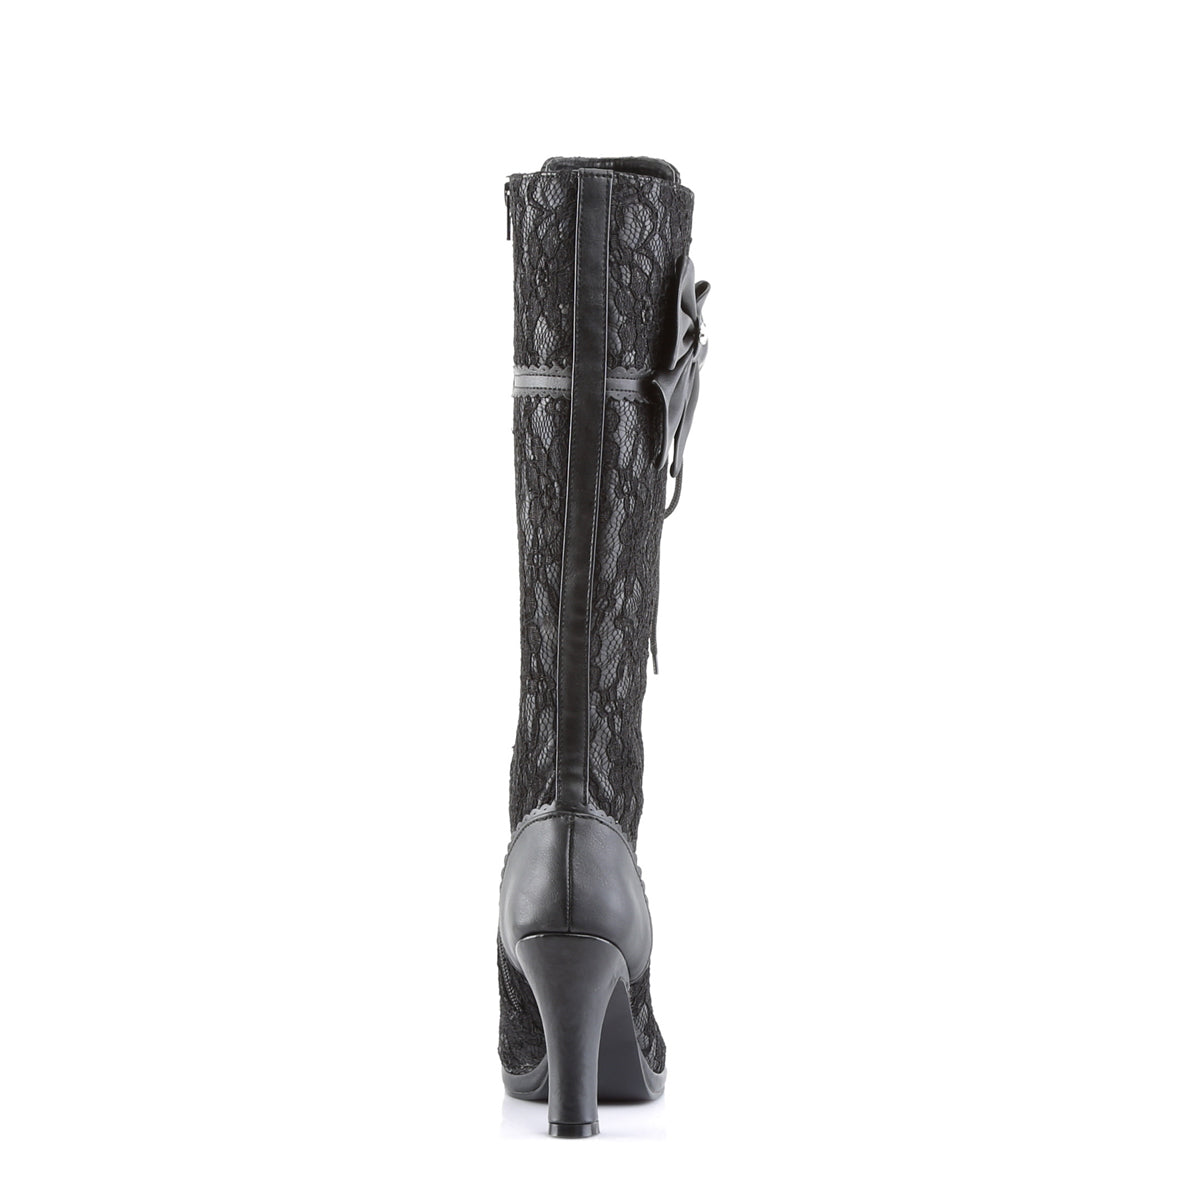 GLAM-240 Demonia Black Vegan Leather-Black Lace Overlay Women's Mid-Calf & Knee High Boots [Alternative Footwear]